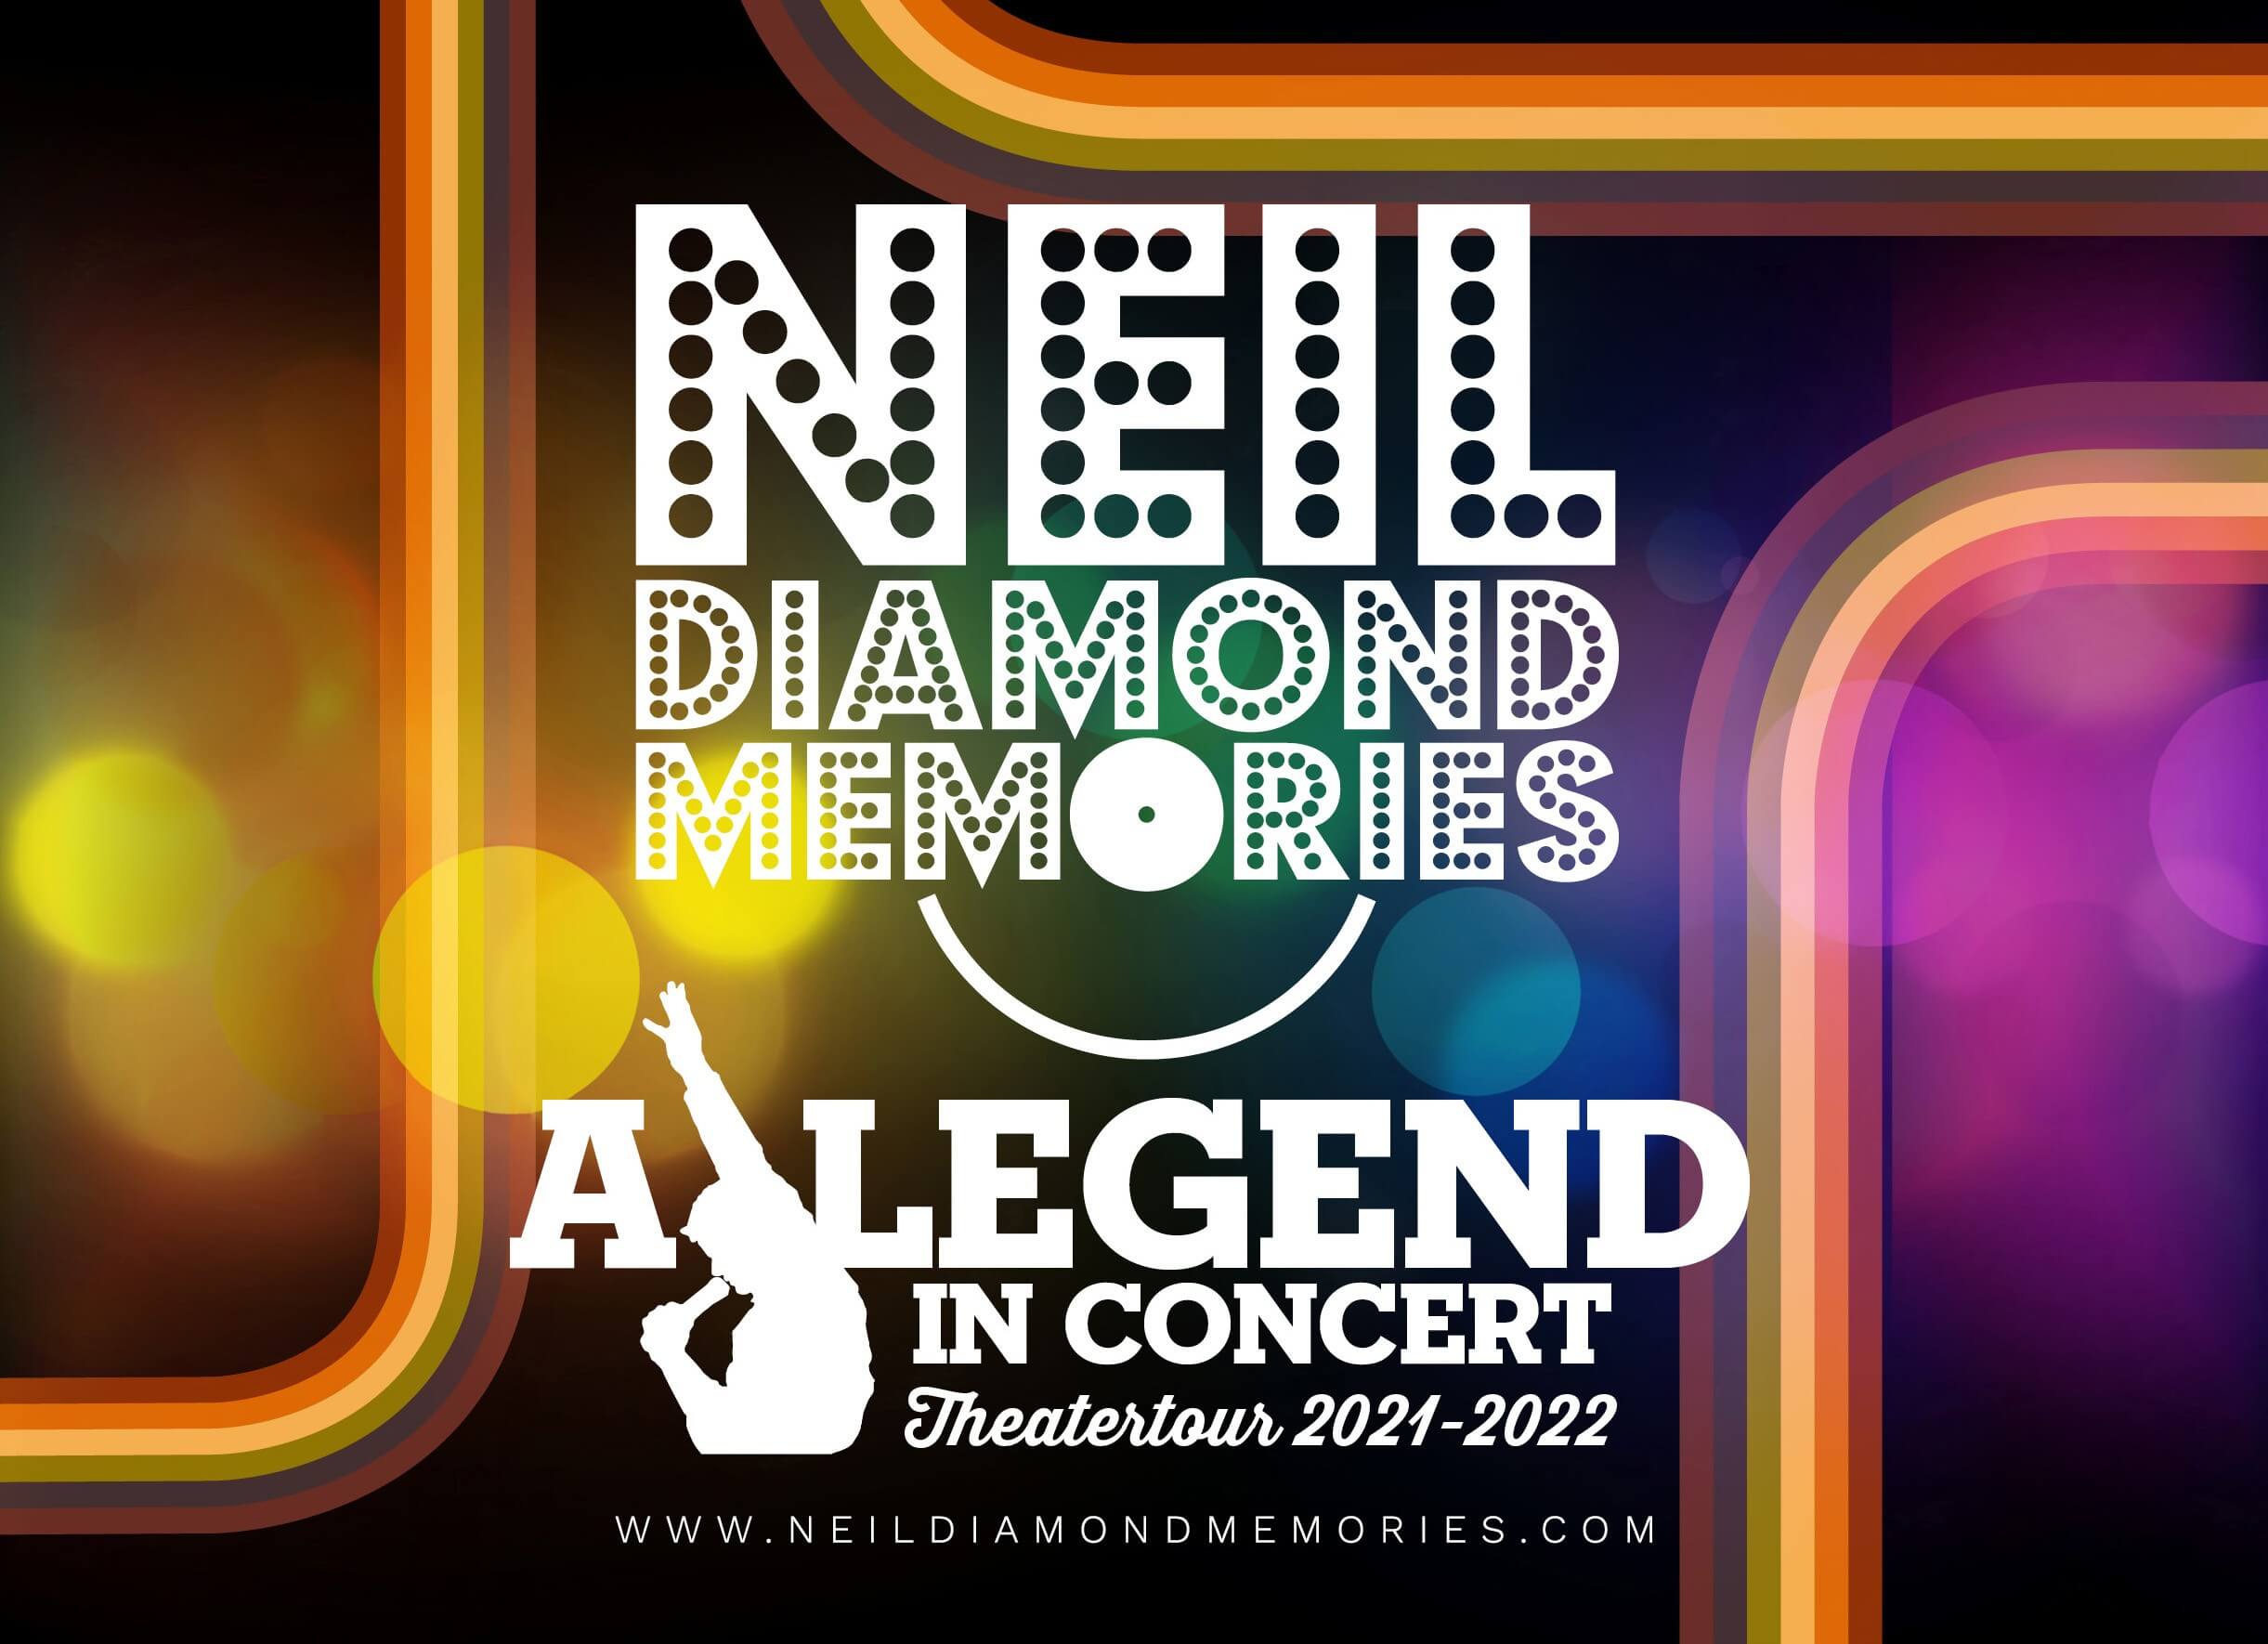 Neil Diamond Memories - A legend in Concert